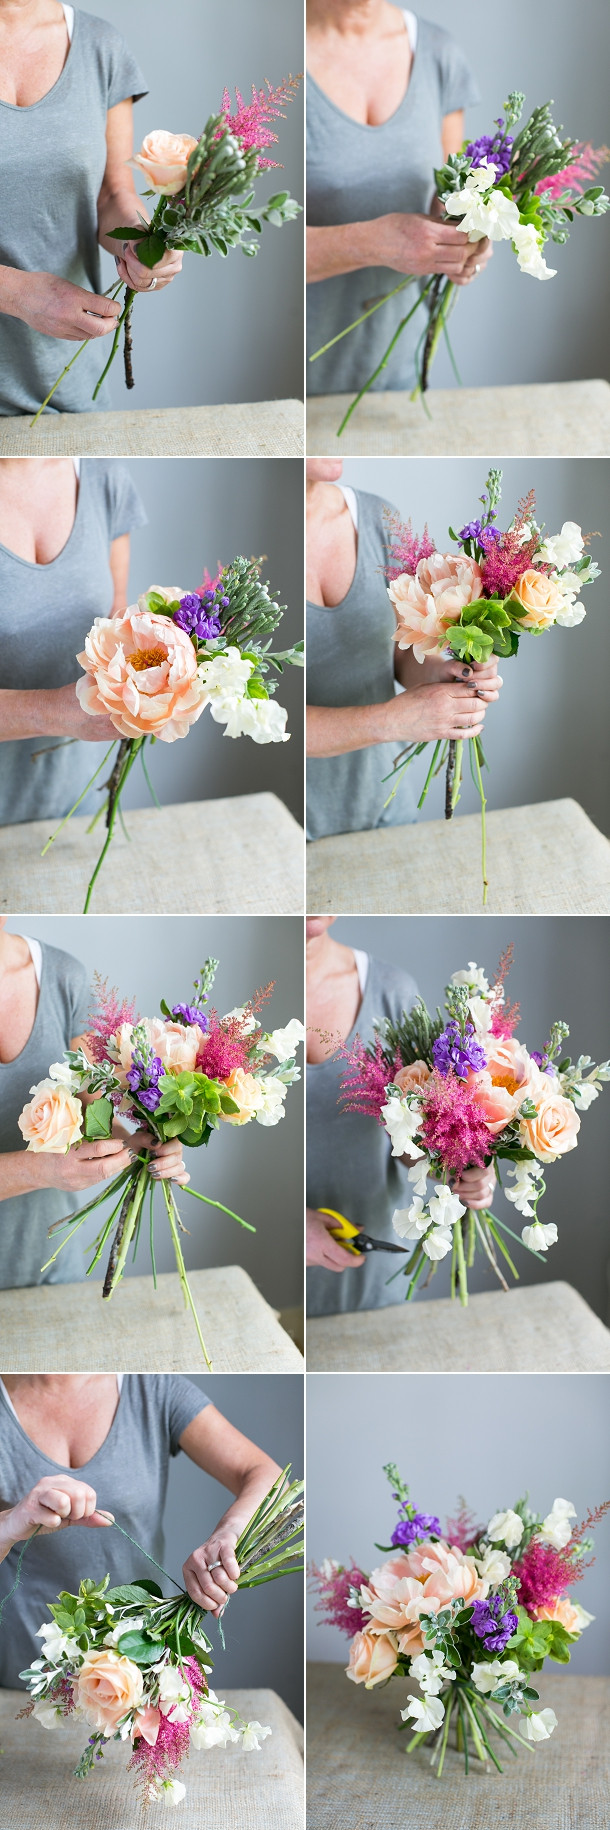 DIY Wedding Floral Arrangements
 DIY Spring bouquet tutorial with peonies